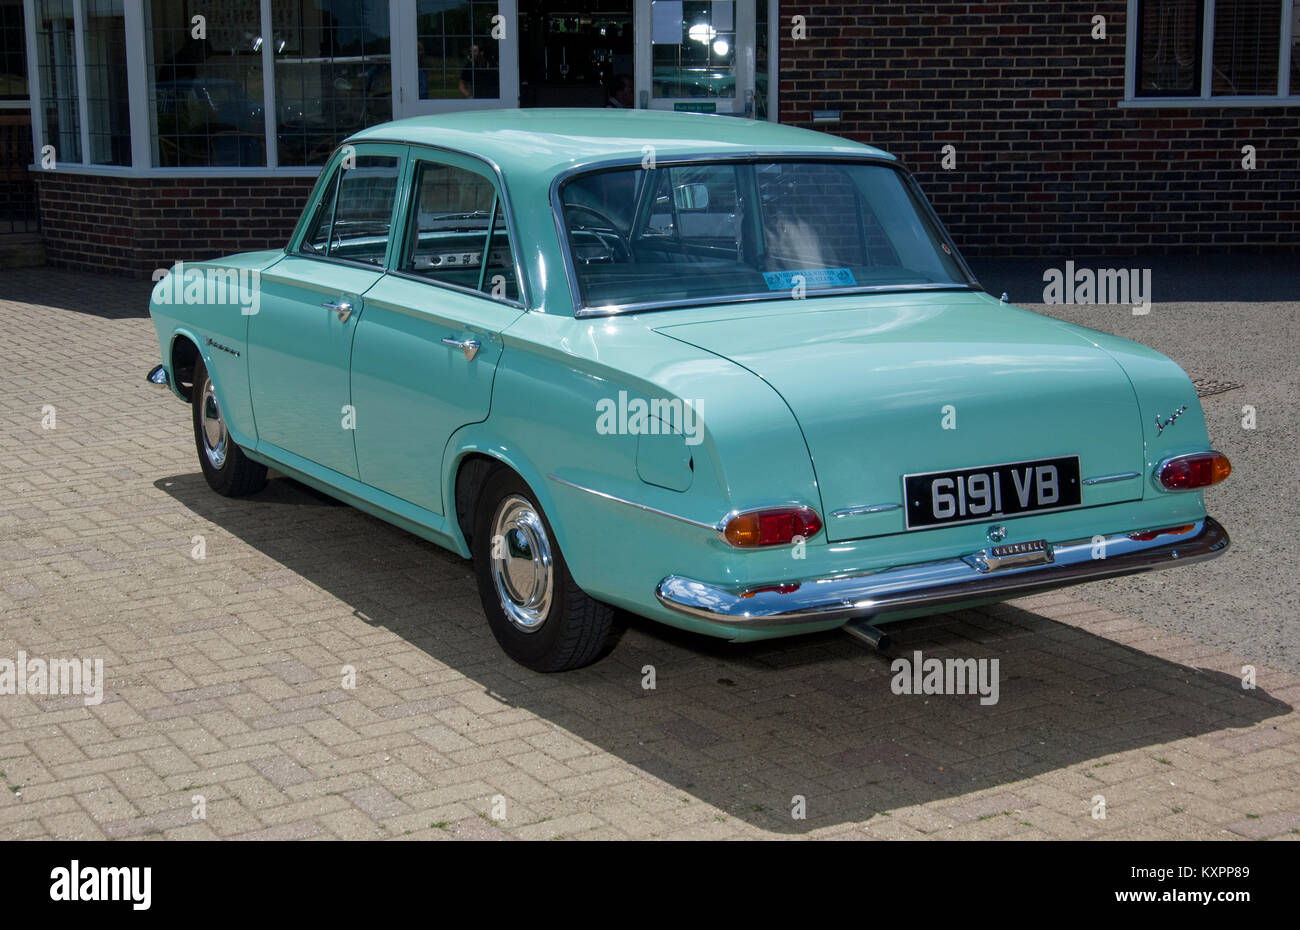 1963 Vauxhall Victor classic British family car Stock Photo